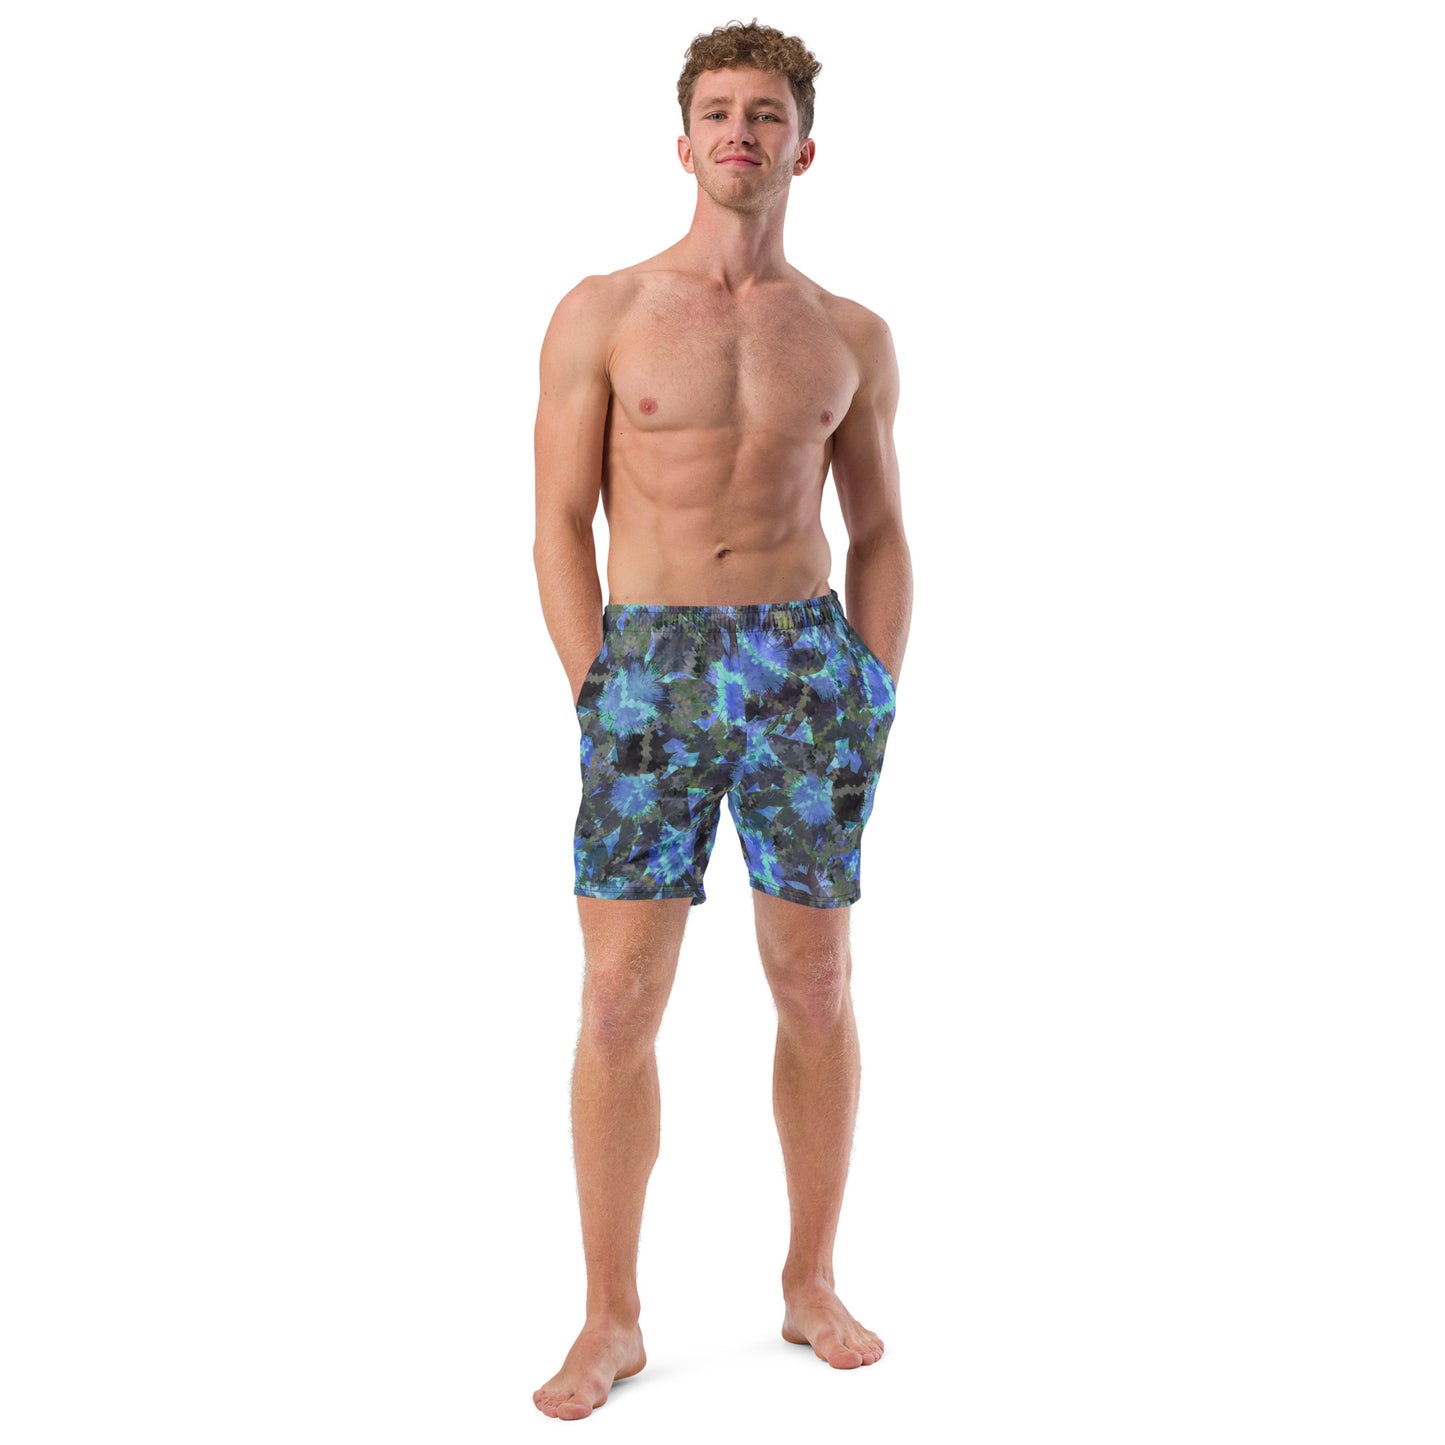 Men’s swim trunks - Reef Camo